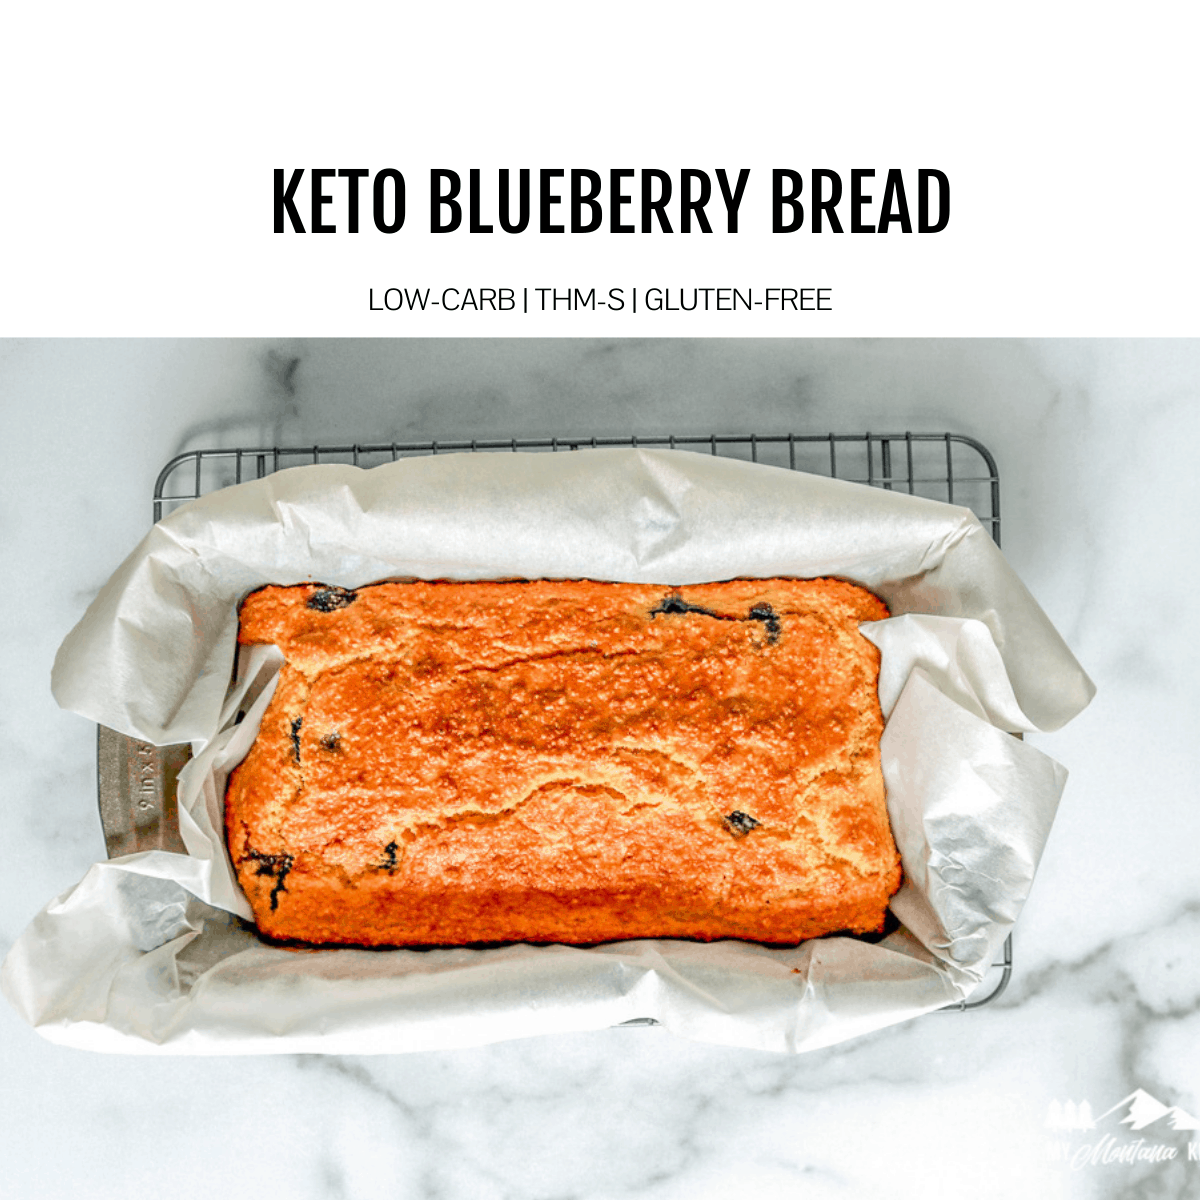 Keto Blueberry Bread